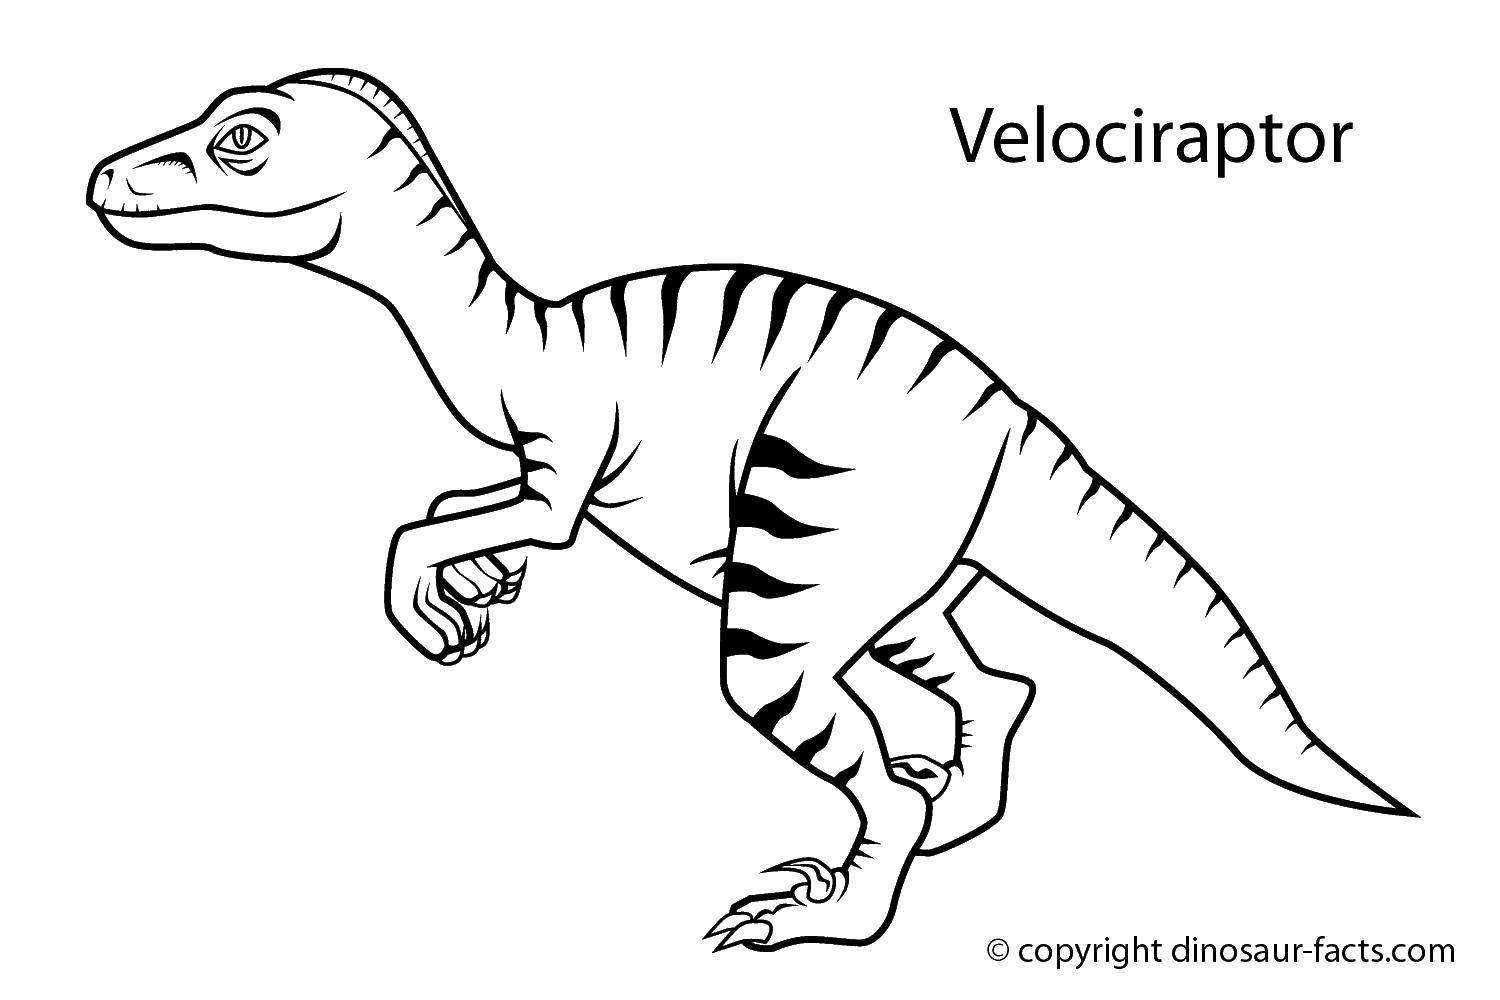 Coloring Little VelociRaptor. Category dinosaur. Tags:  VelociRaptor, dinosaur.